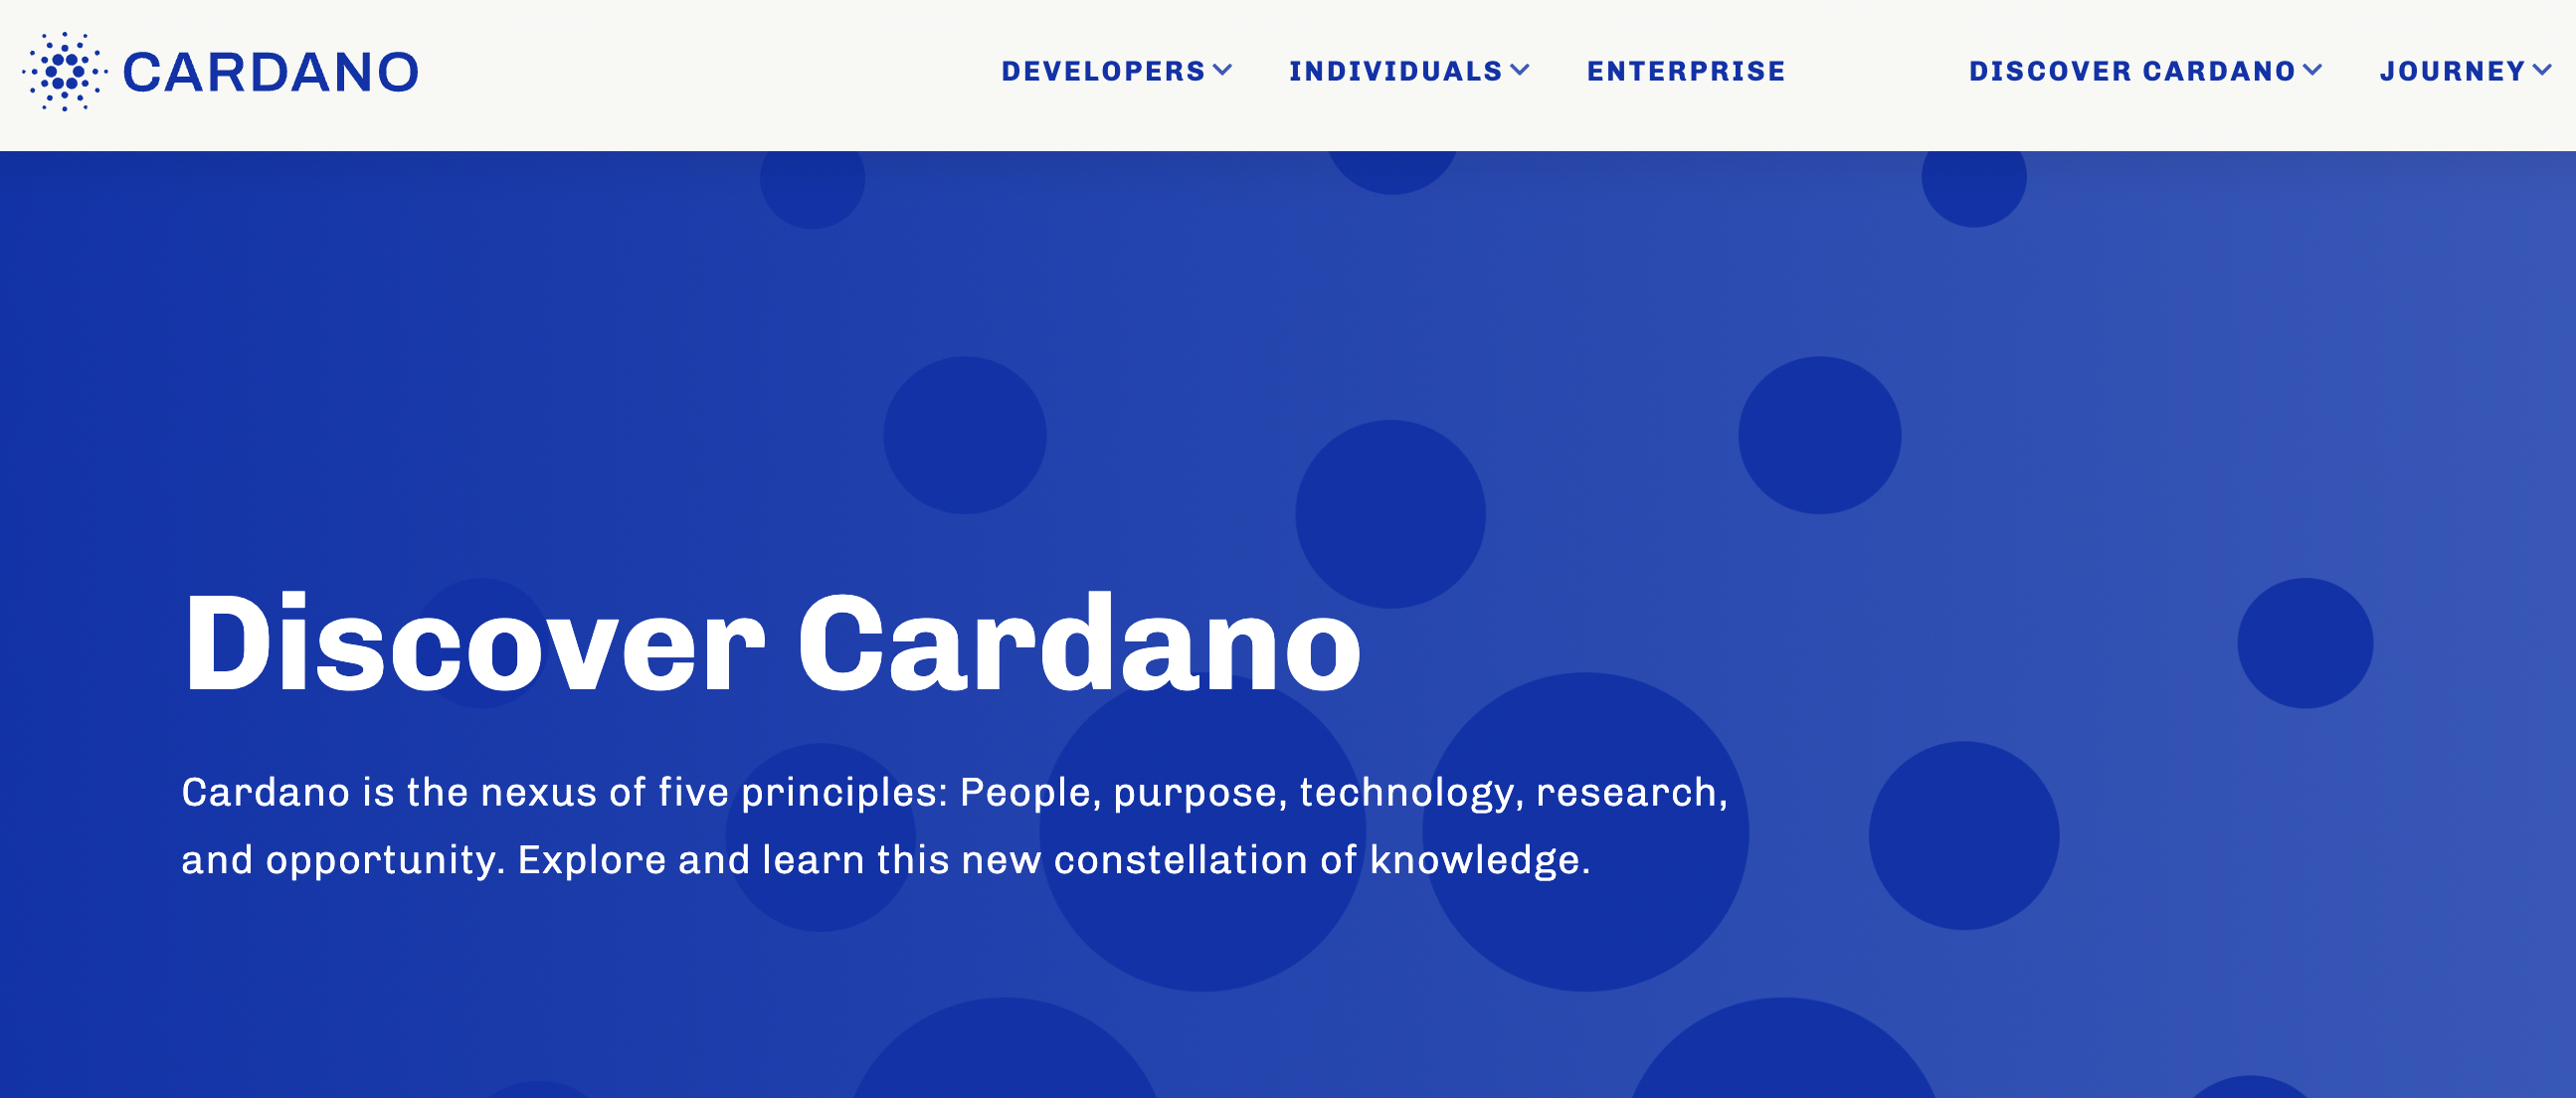 Cardano blockchain home page